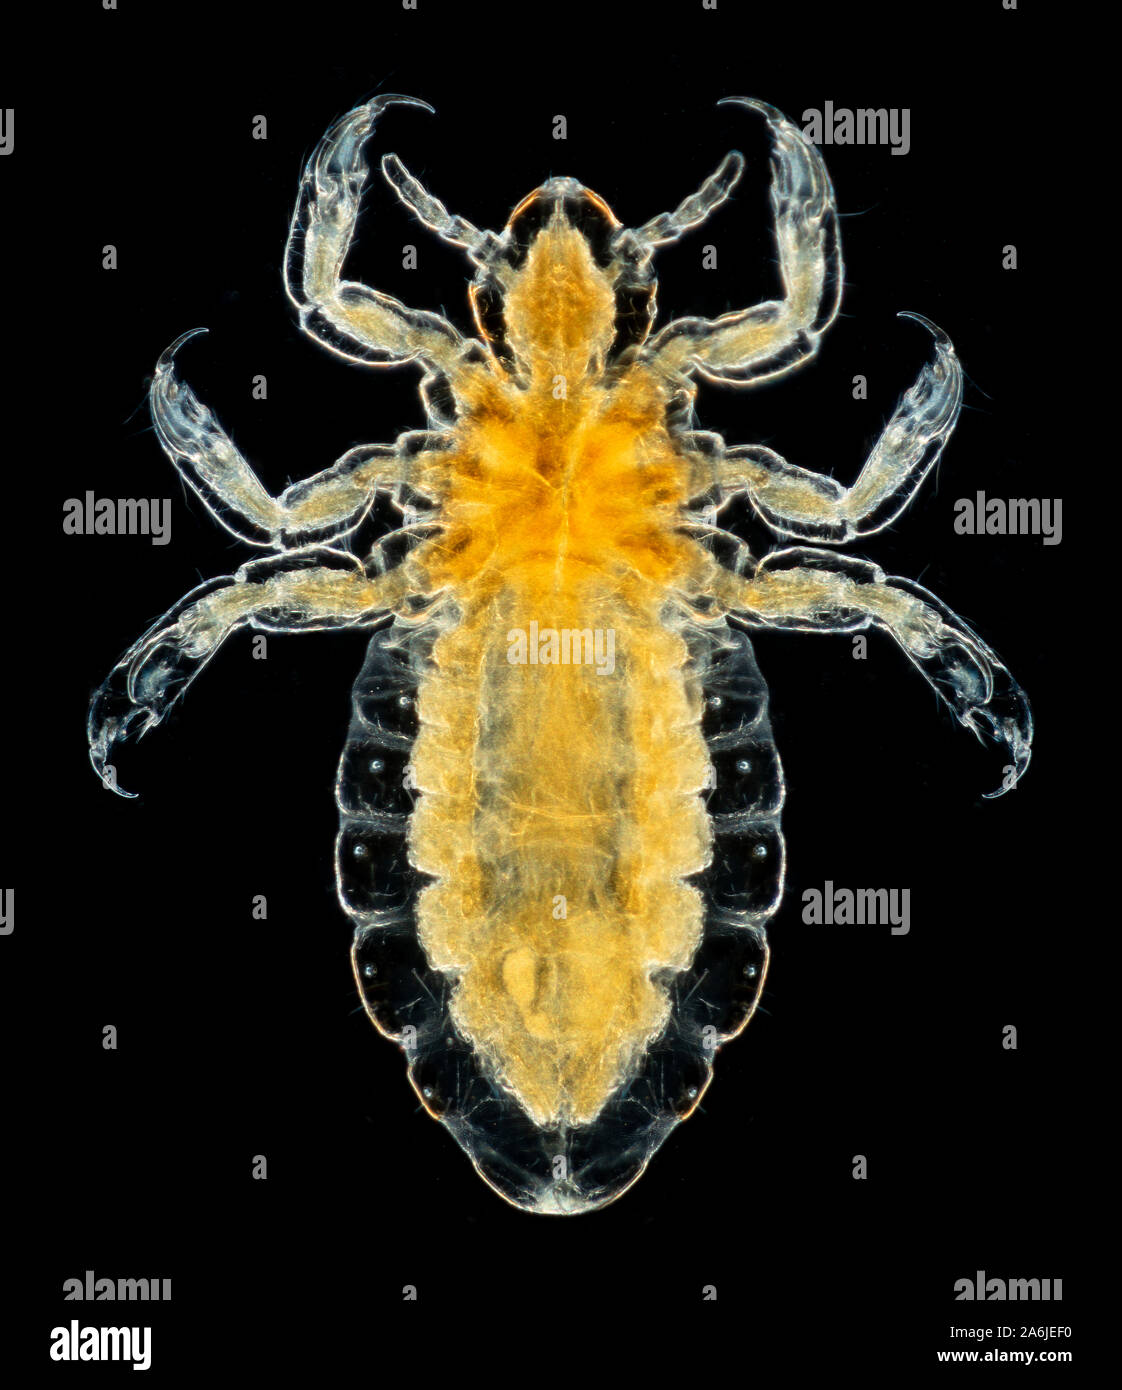 Human body louse, male, Pediculus humanus humanus, Stock Photo